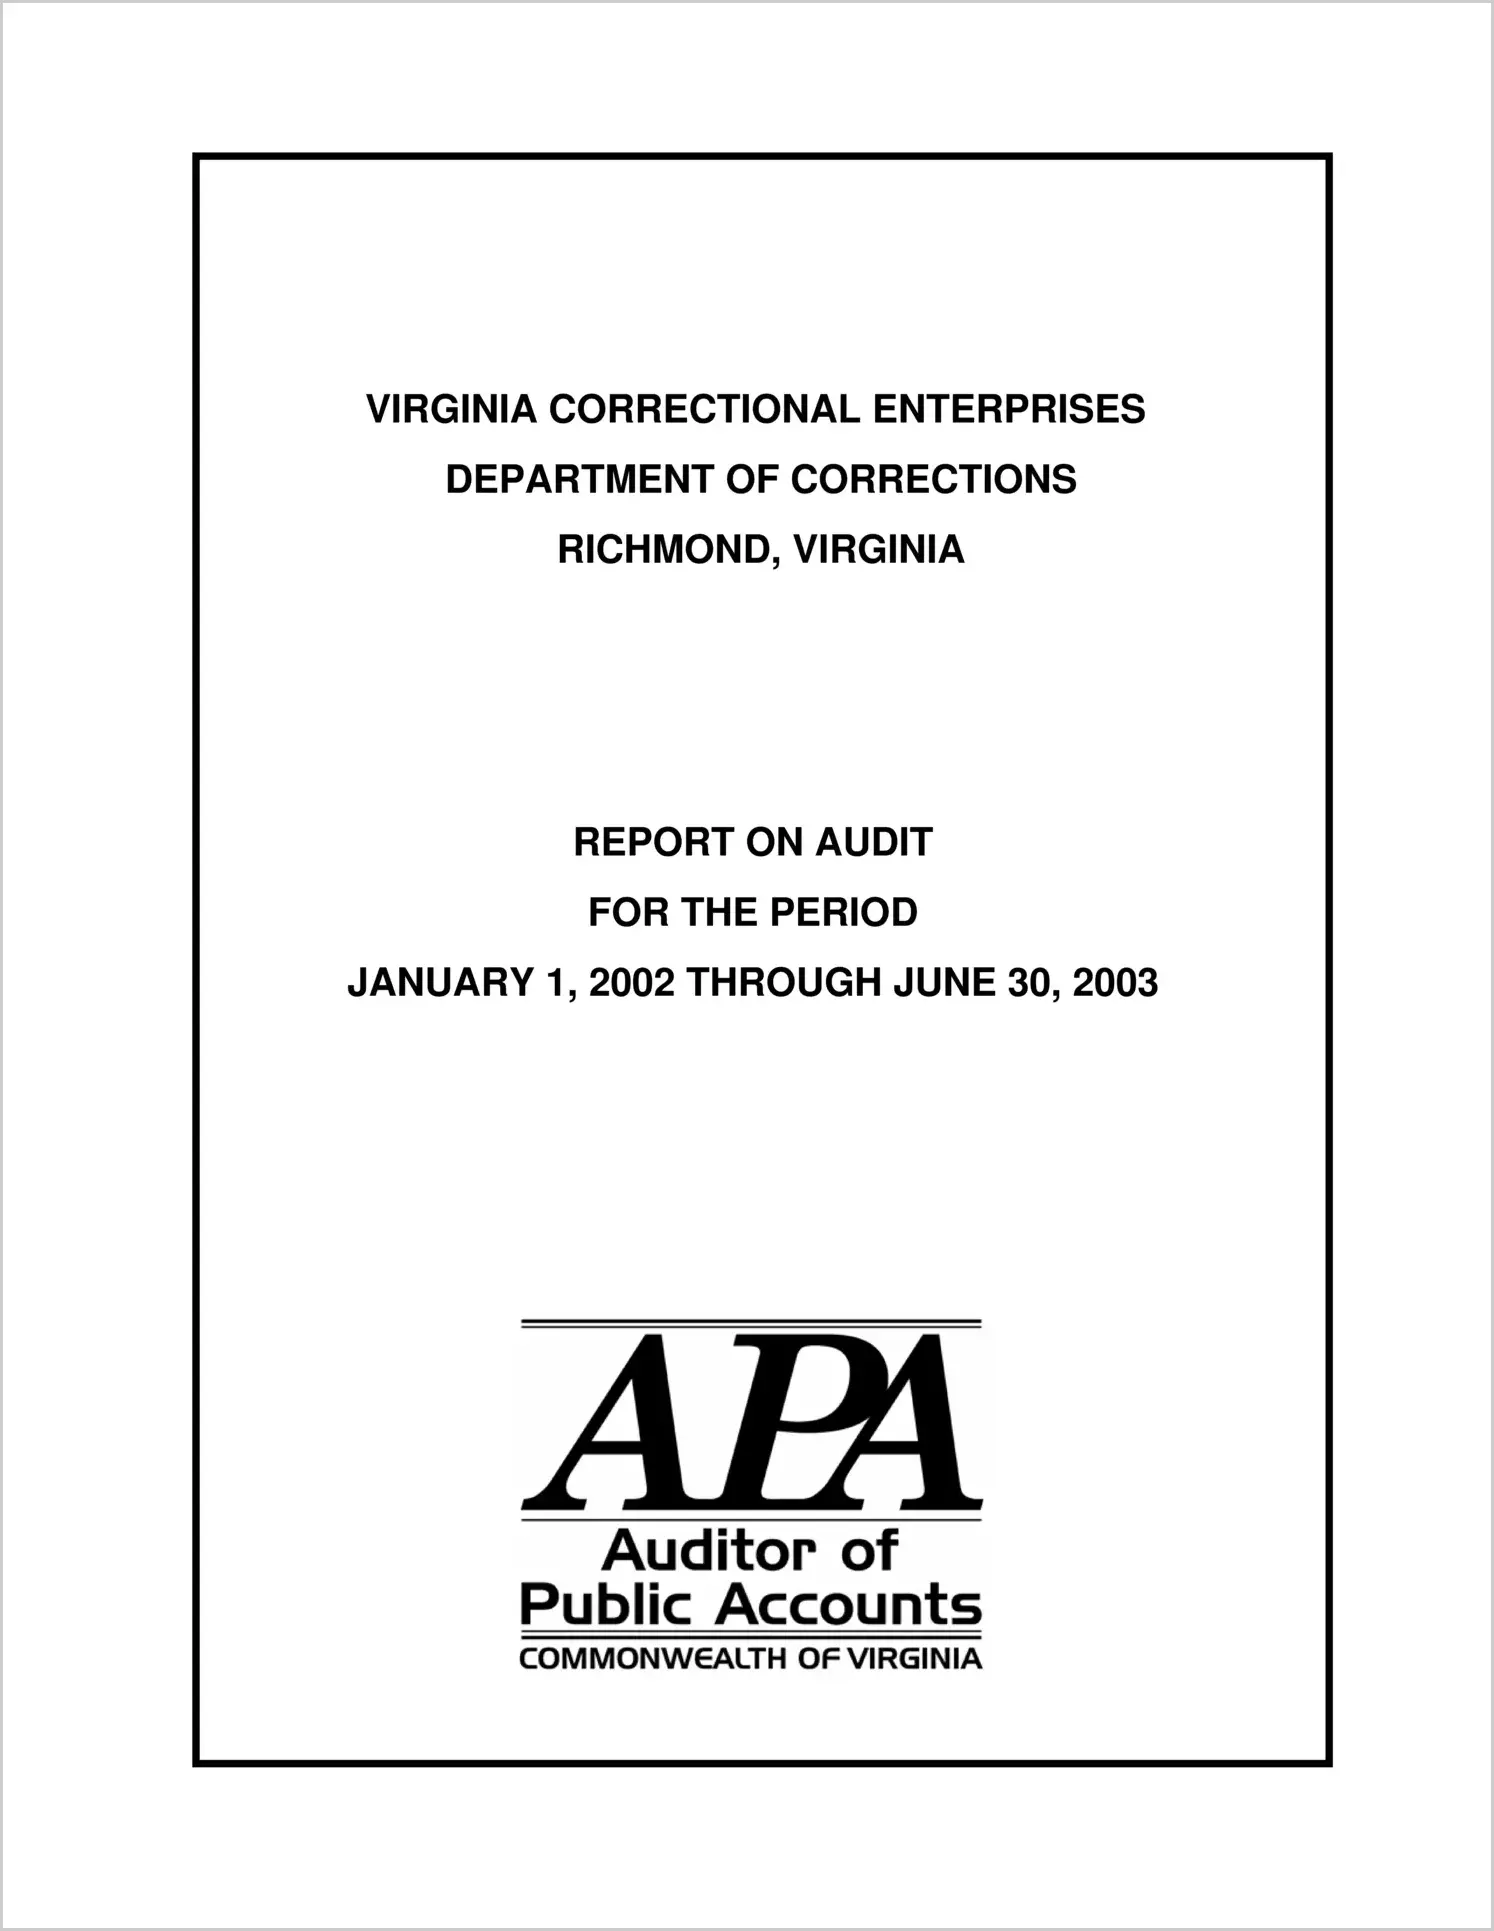 Virginia Correctional Enterprises for the period of January 1, 2002 through June 30, 2003